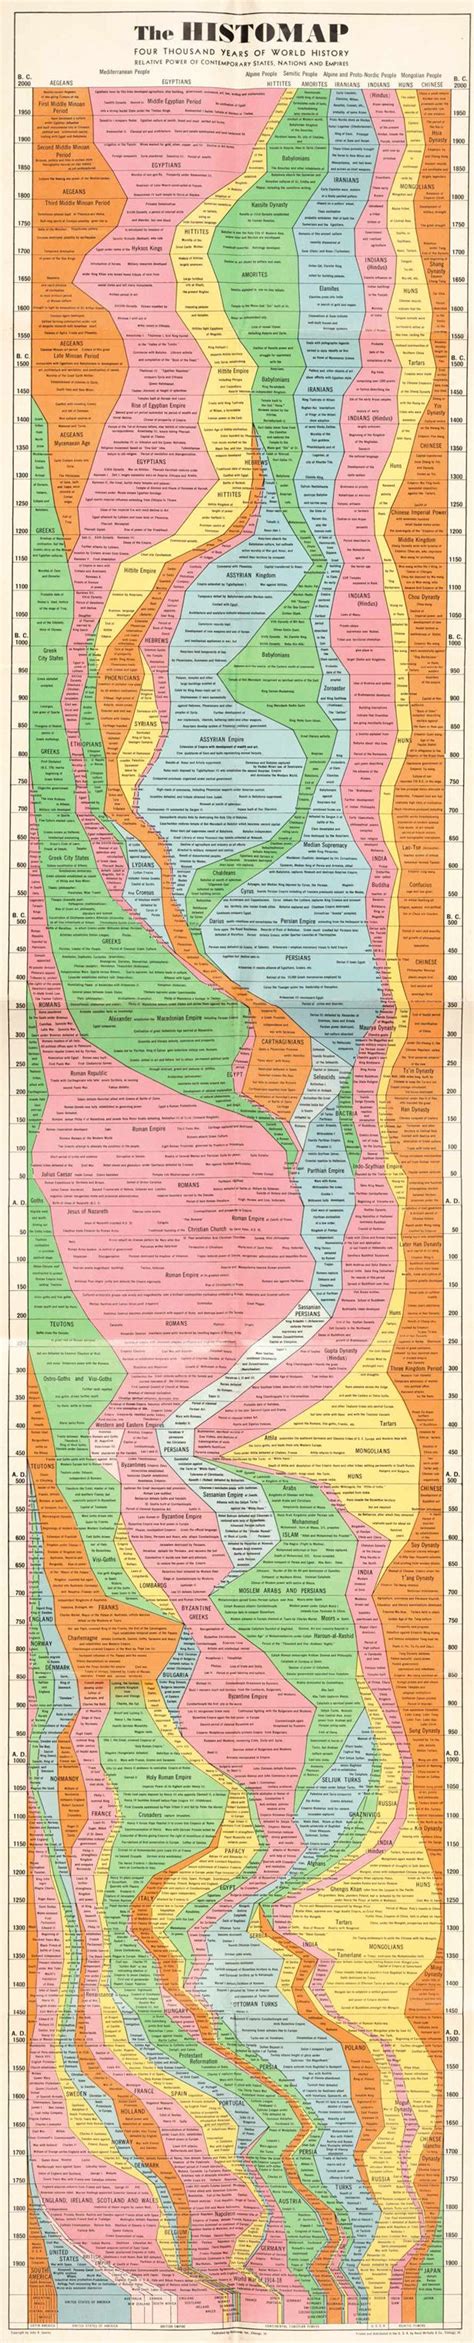 Art History Timeline, Ww2 Timeline, Hannah Arendt, Flow Chart, Art Of Living, Data Visualization ...